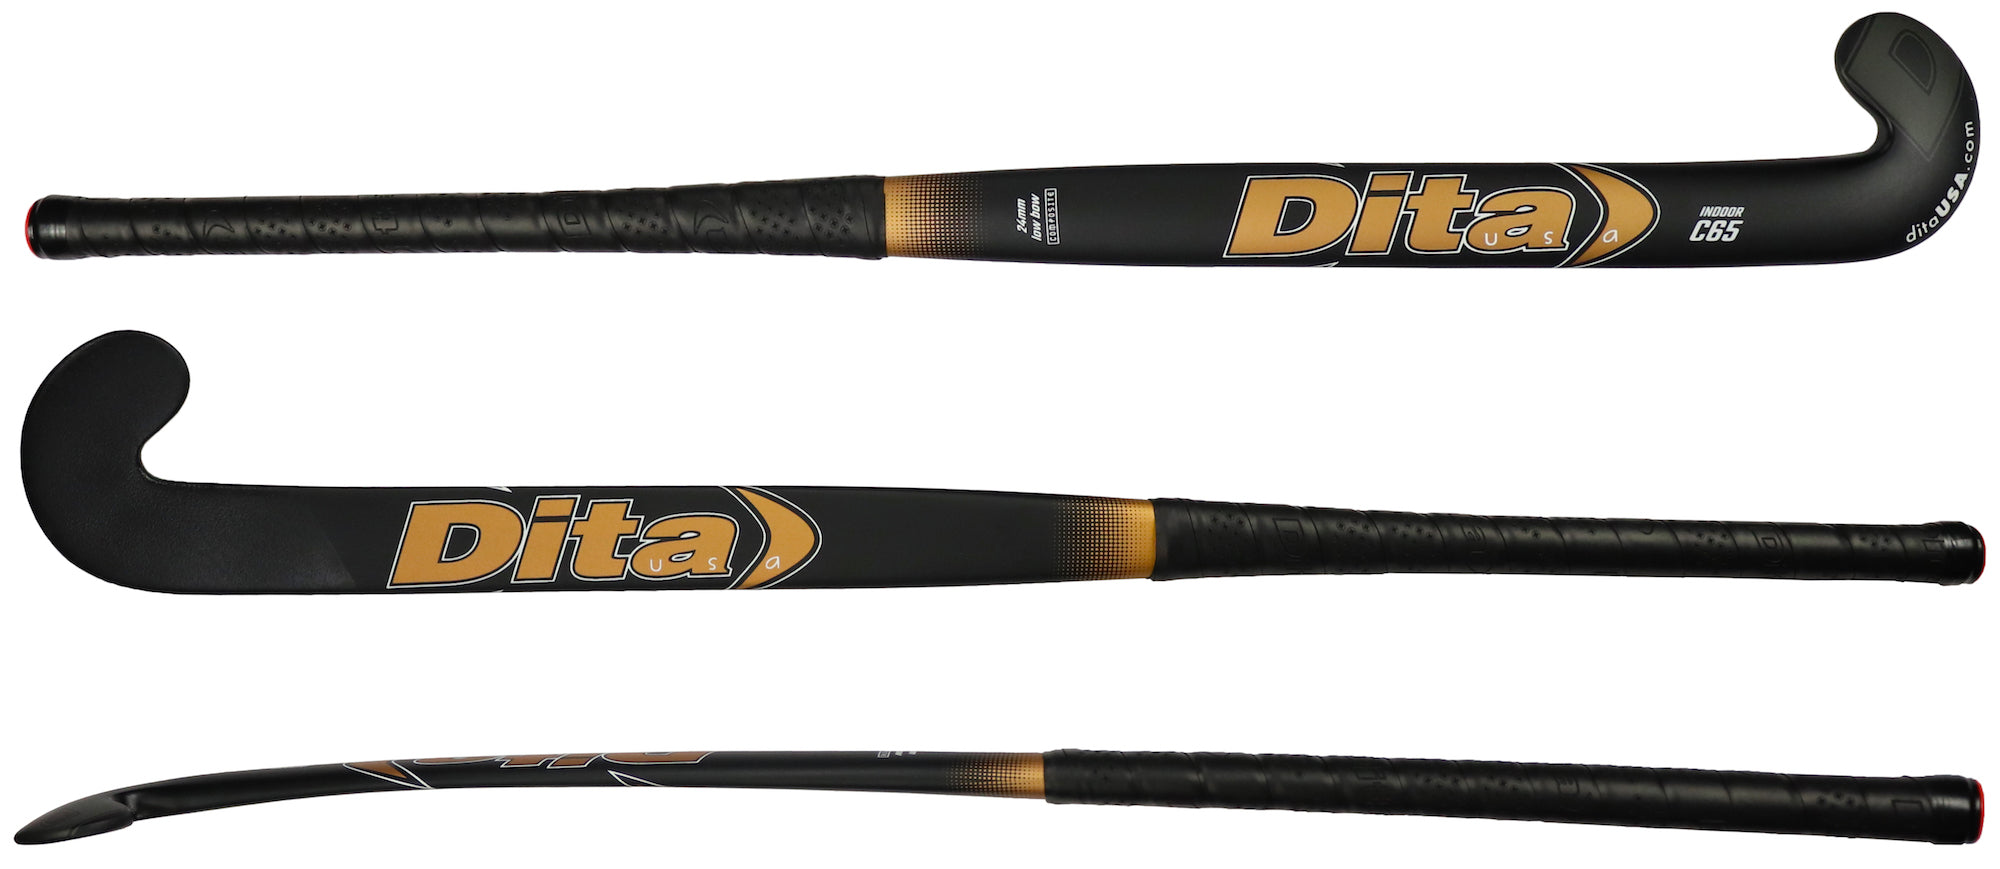 INDOOR Dita USA C65 Full Composite Field Hockey Stick